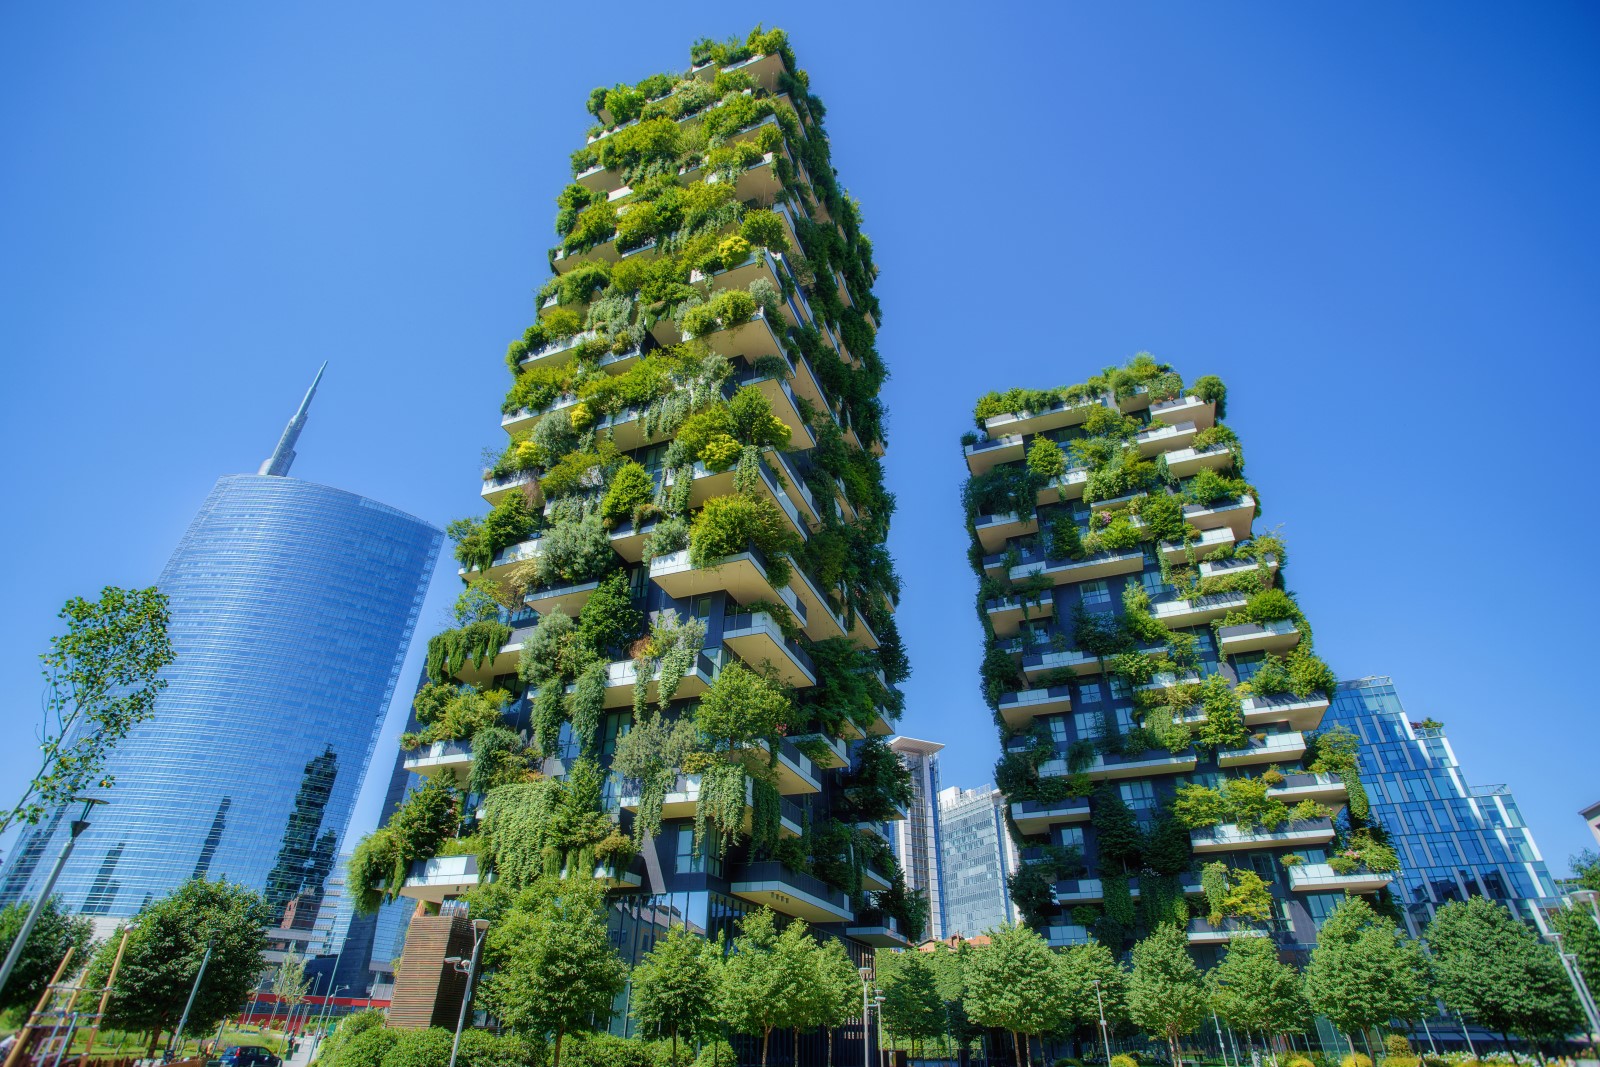 The green city of the future Spotlight